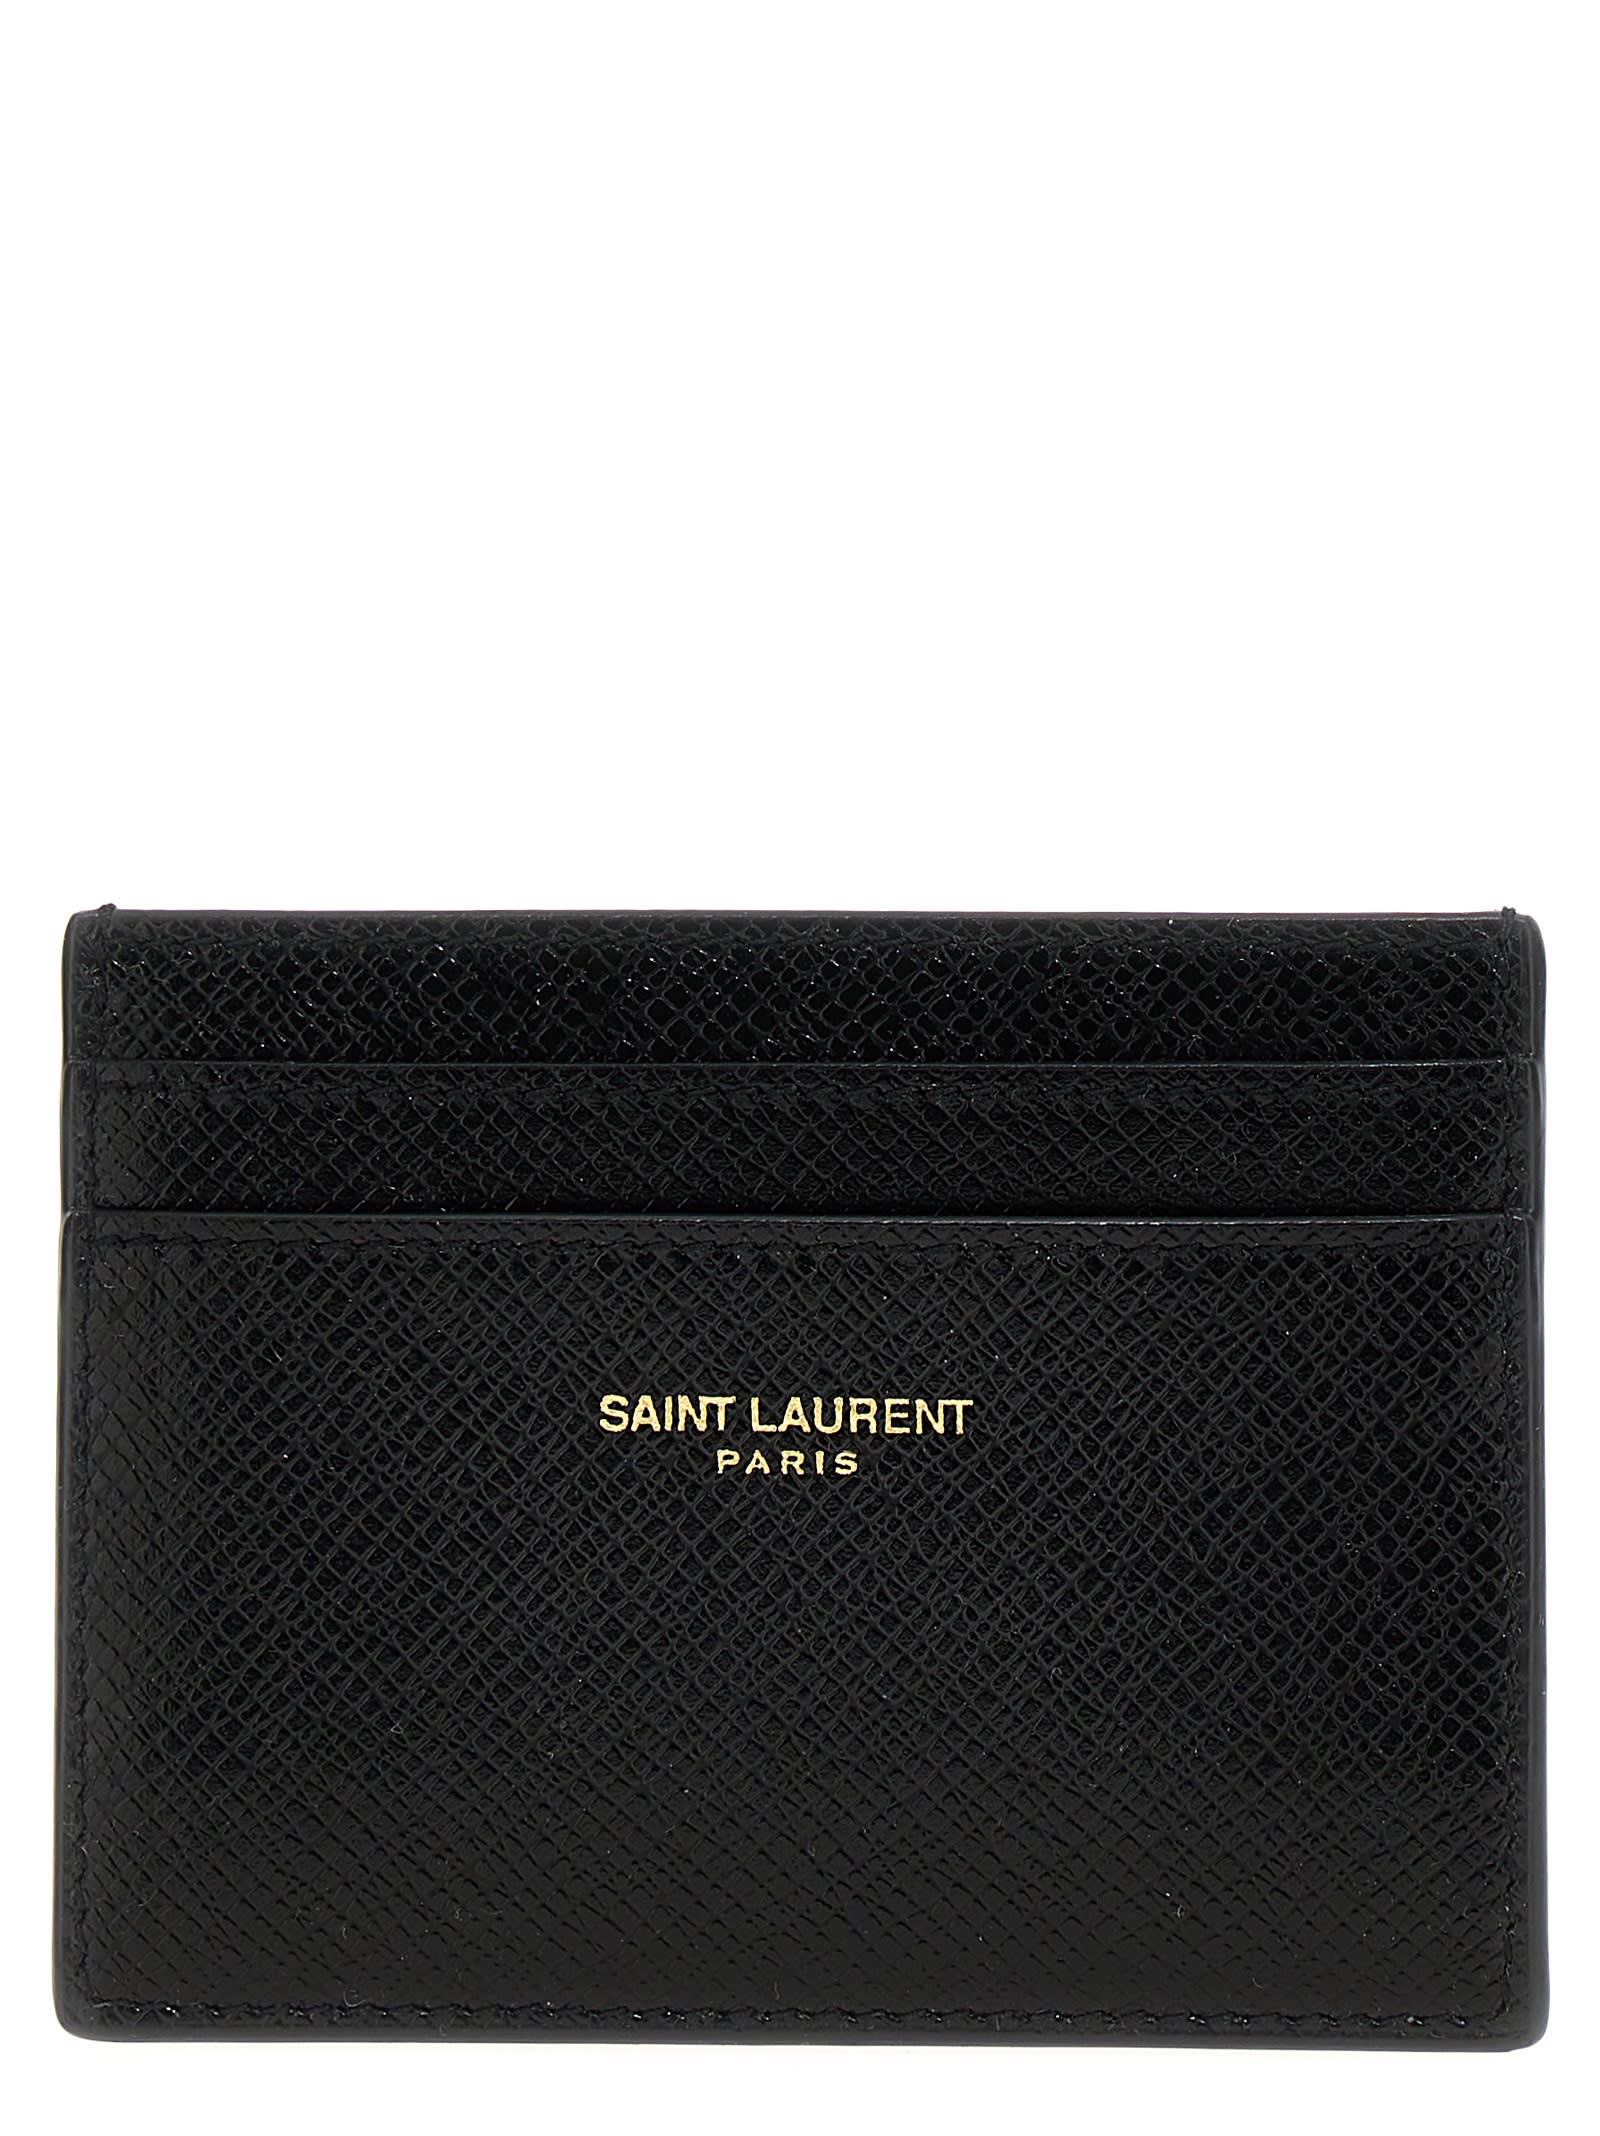 Saint Laurent Paris Logo Detailed Card Case In Black